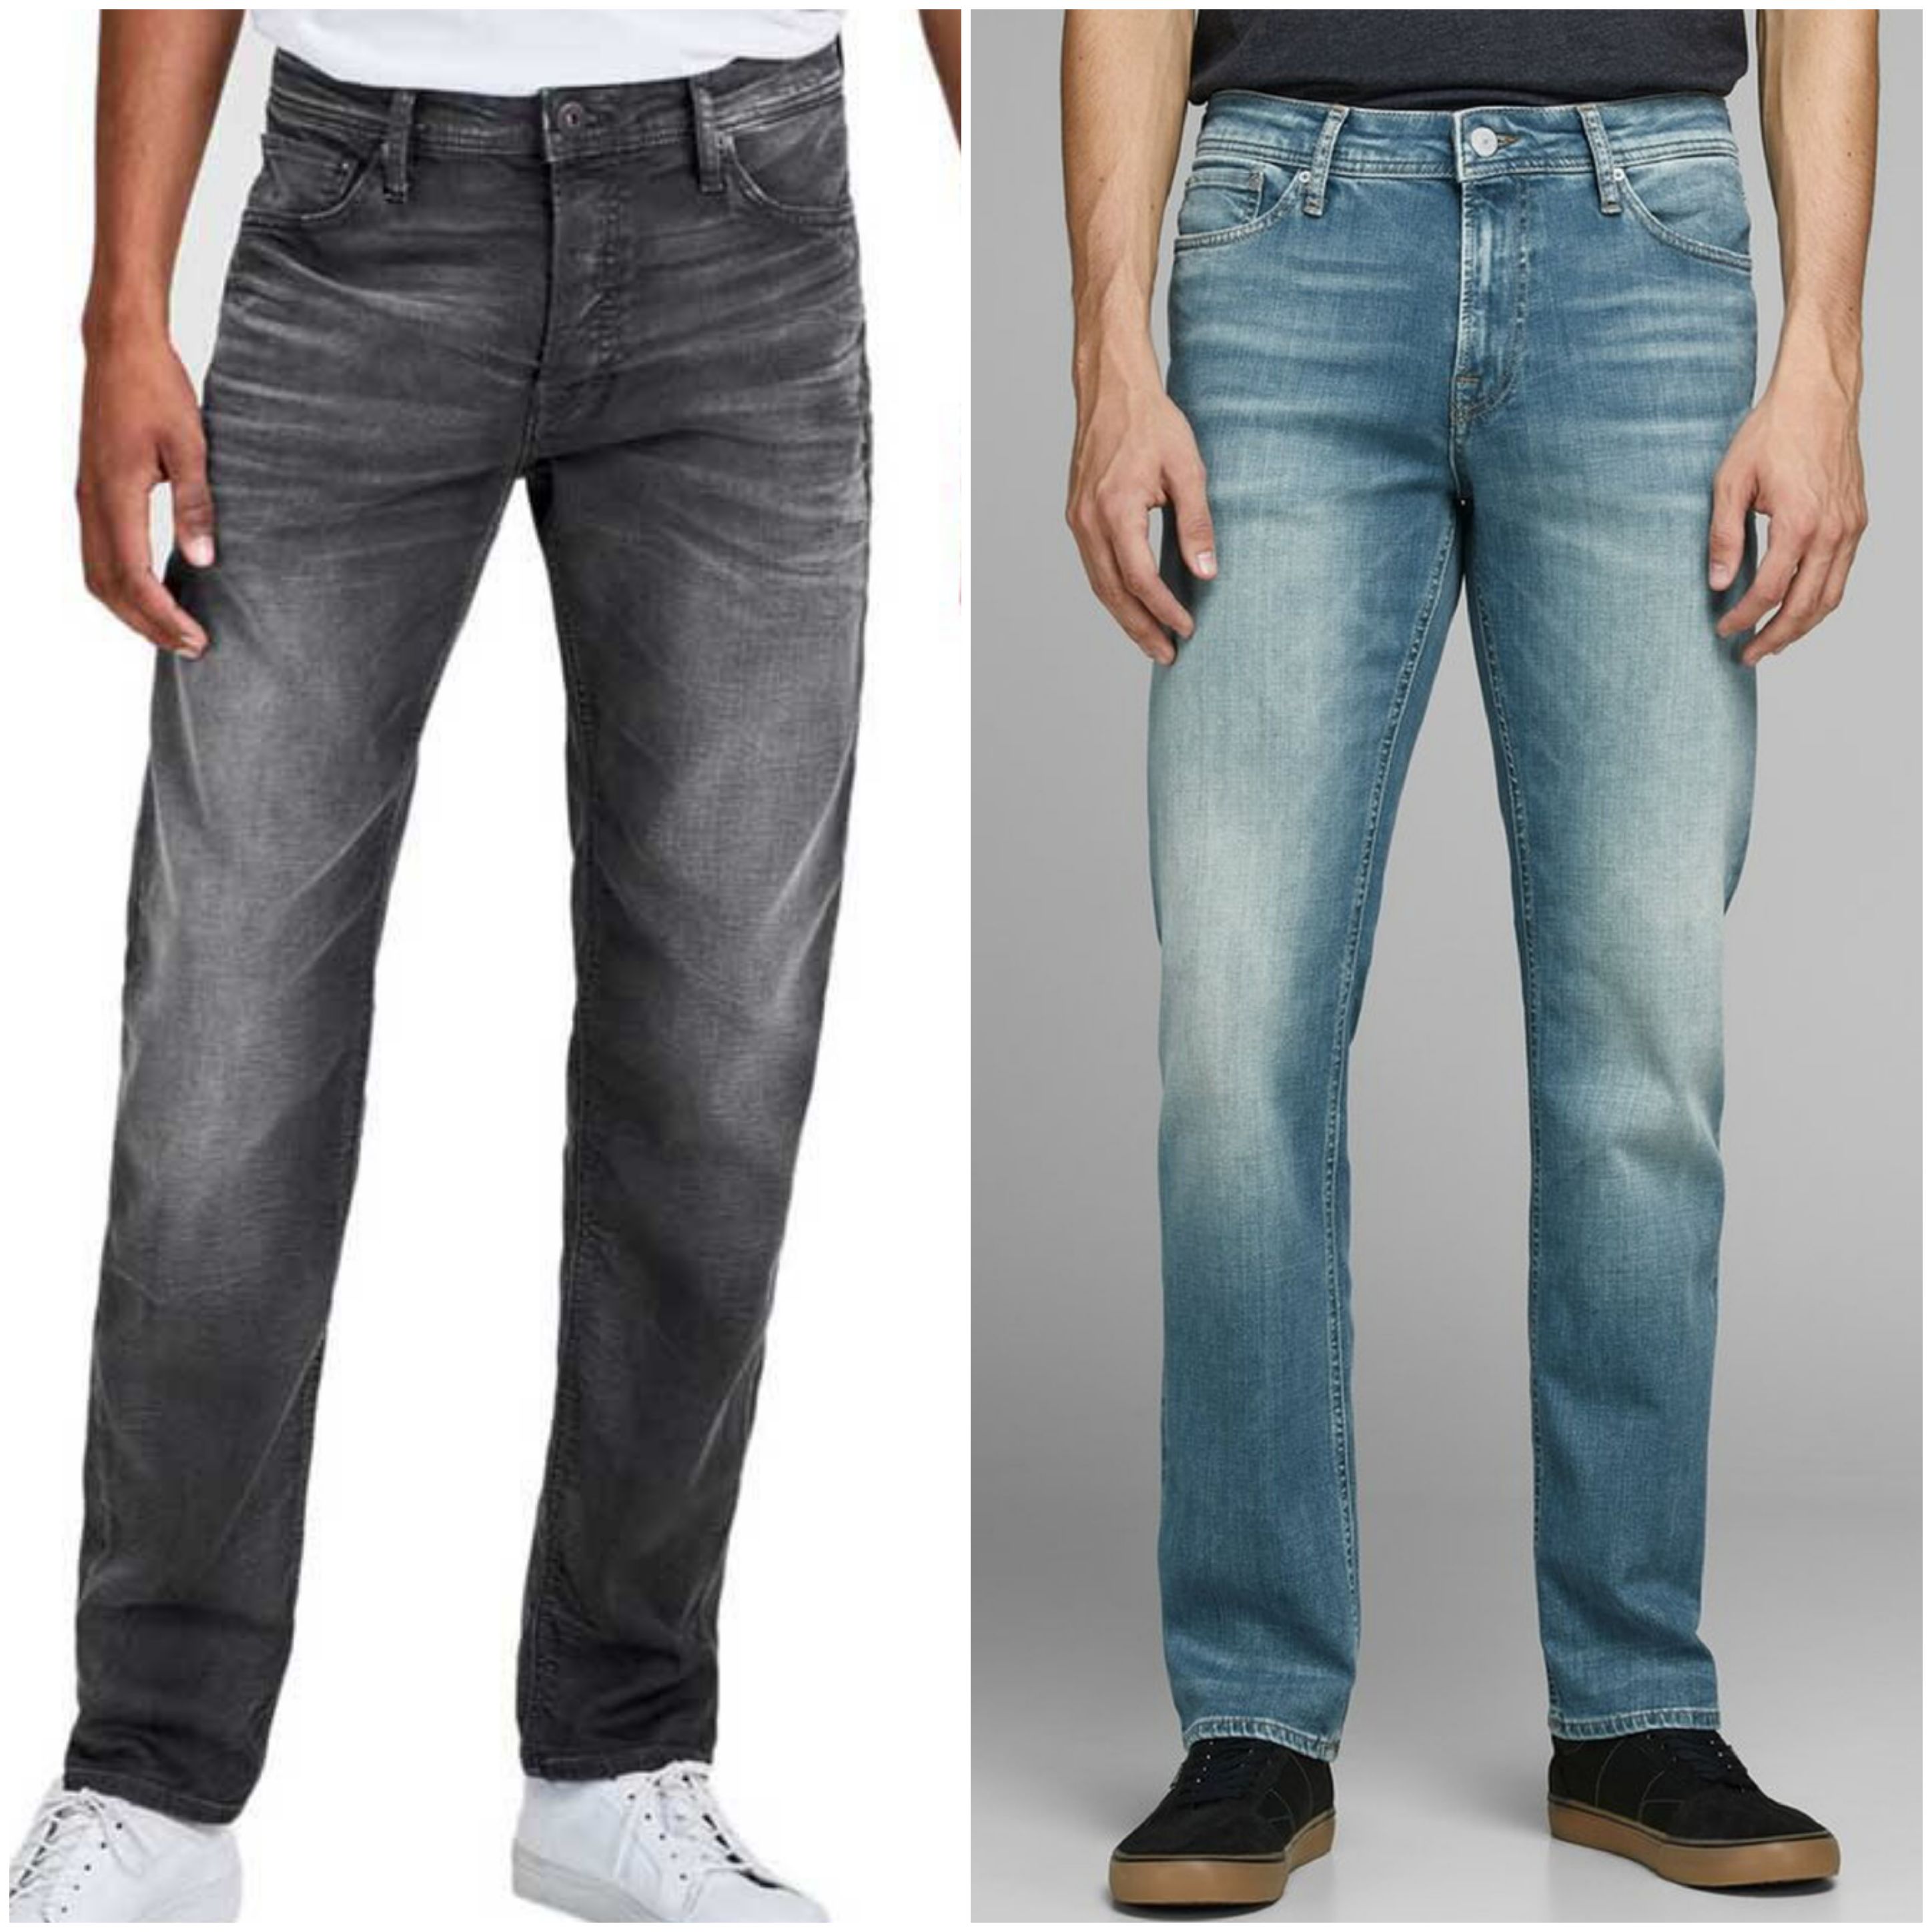 clark original zip jj 913 regular fit jeans